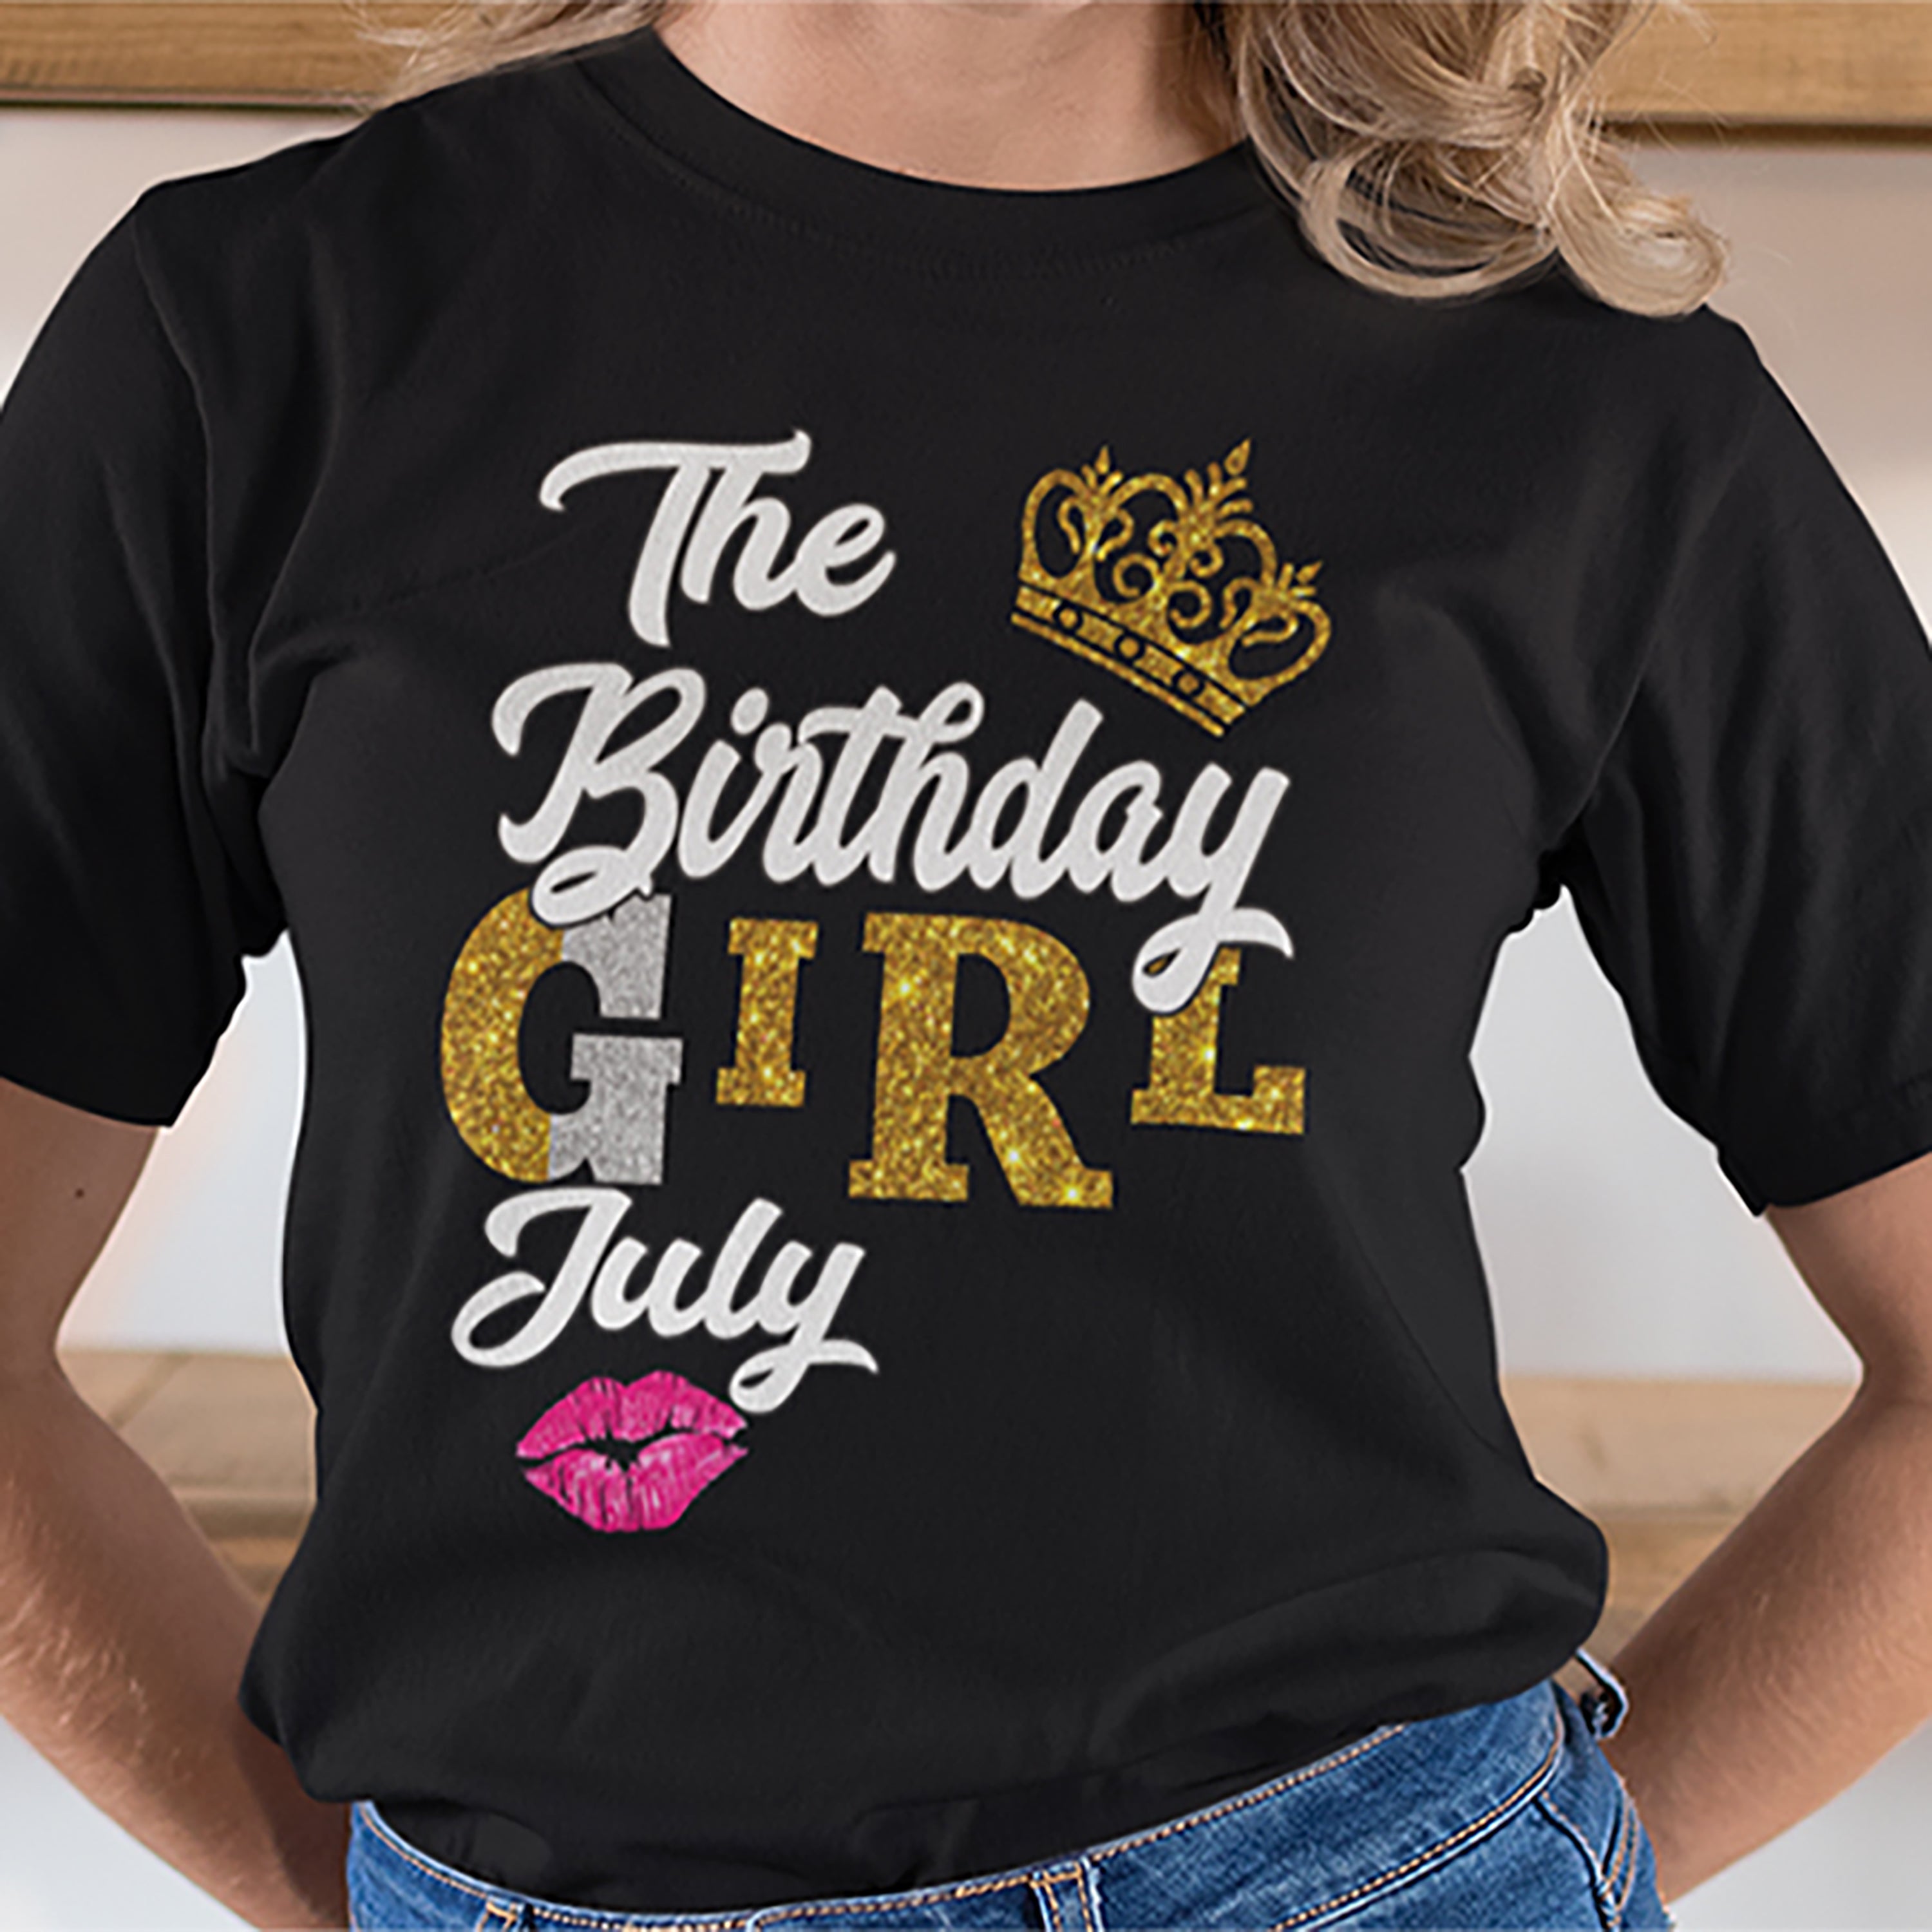 " The birthday girl july NEW "